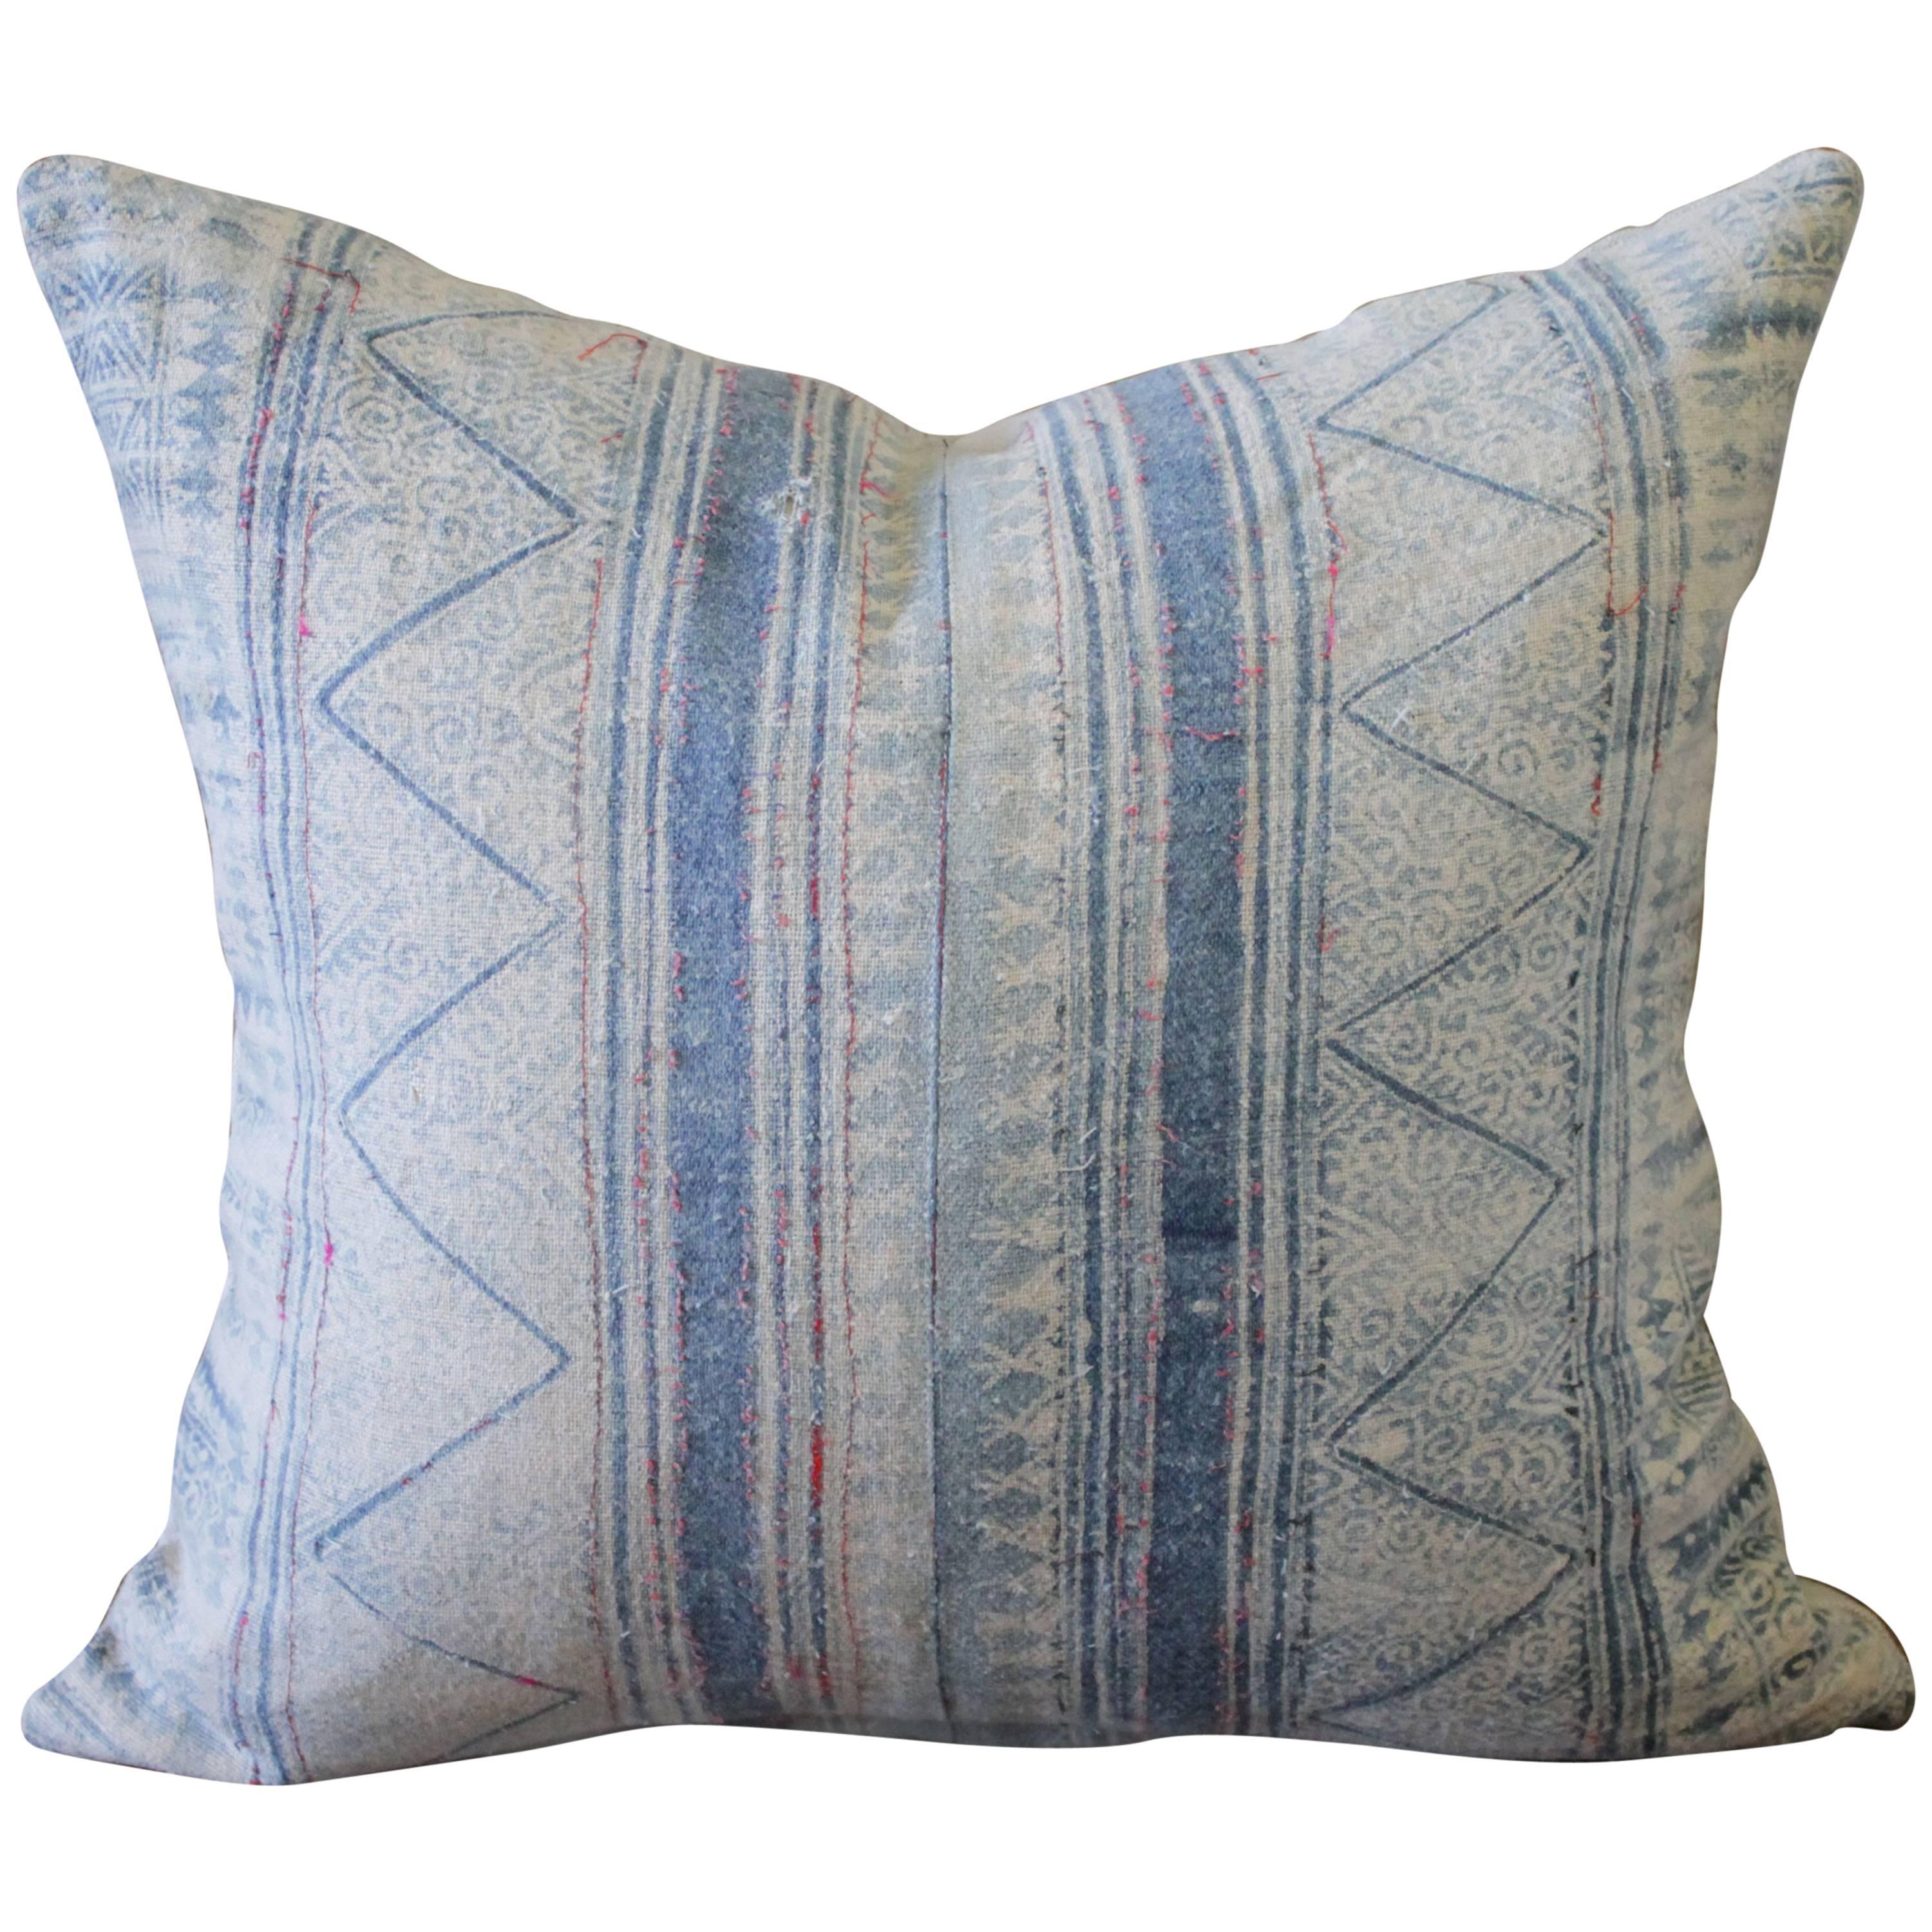 Vintage Blue Batik Accent Pillow with Pink Threads